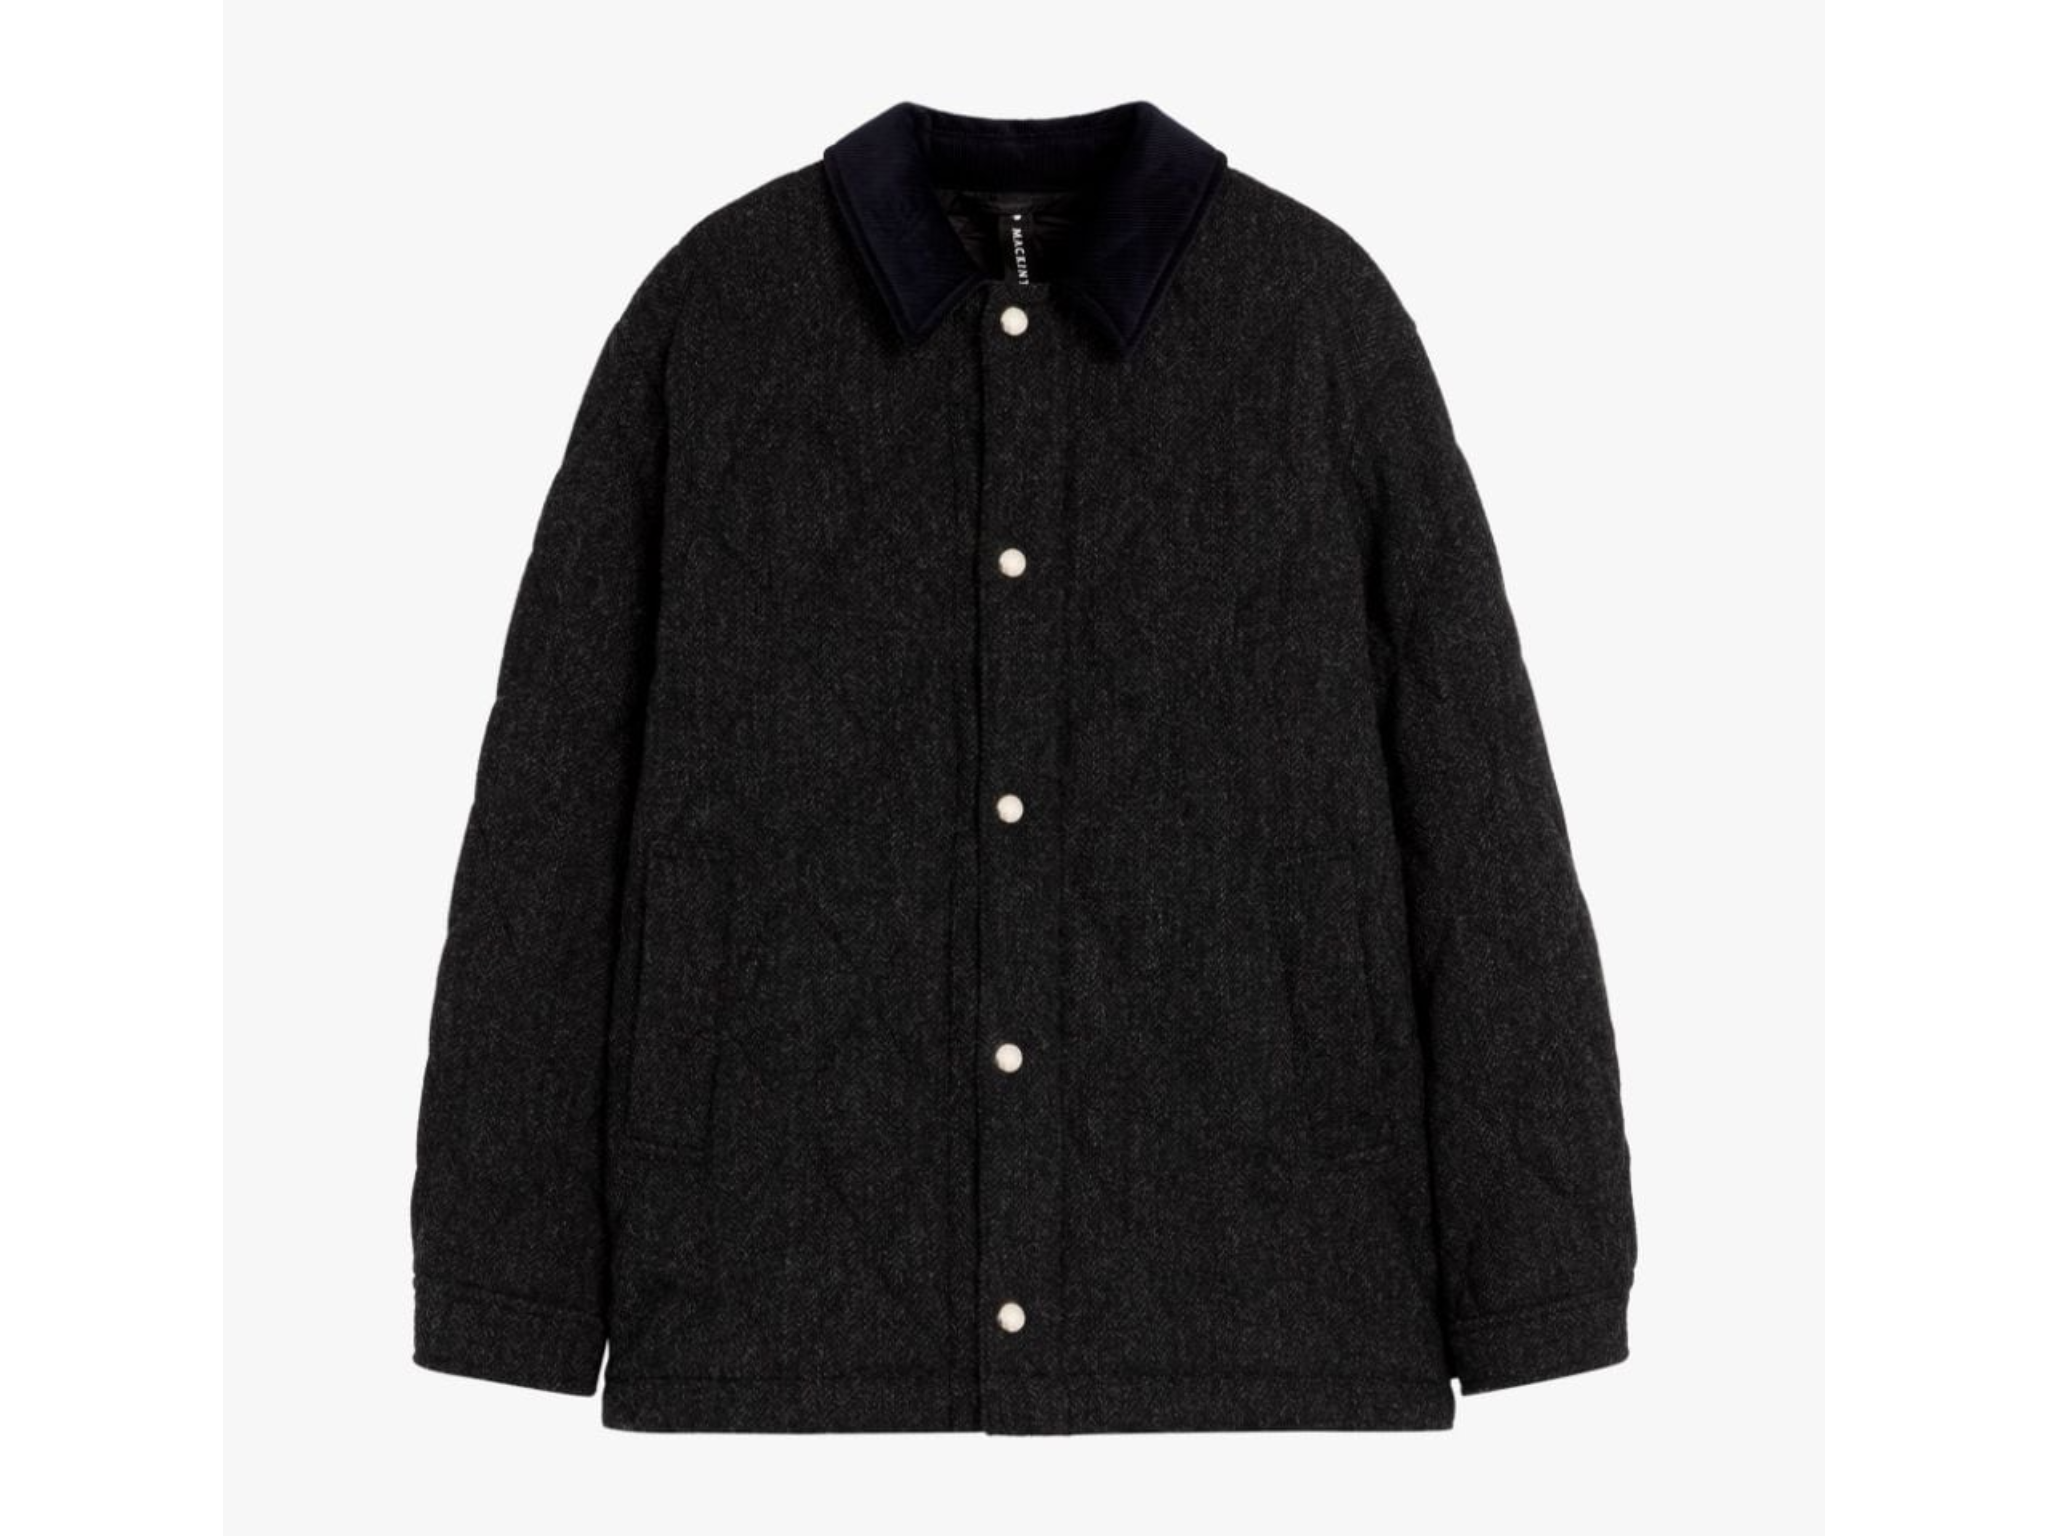 Mackintosh teeming jacket